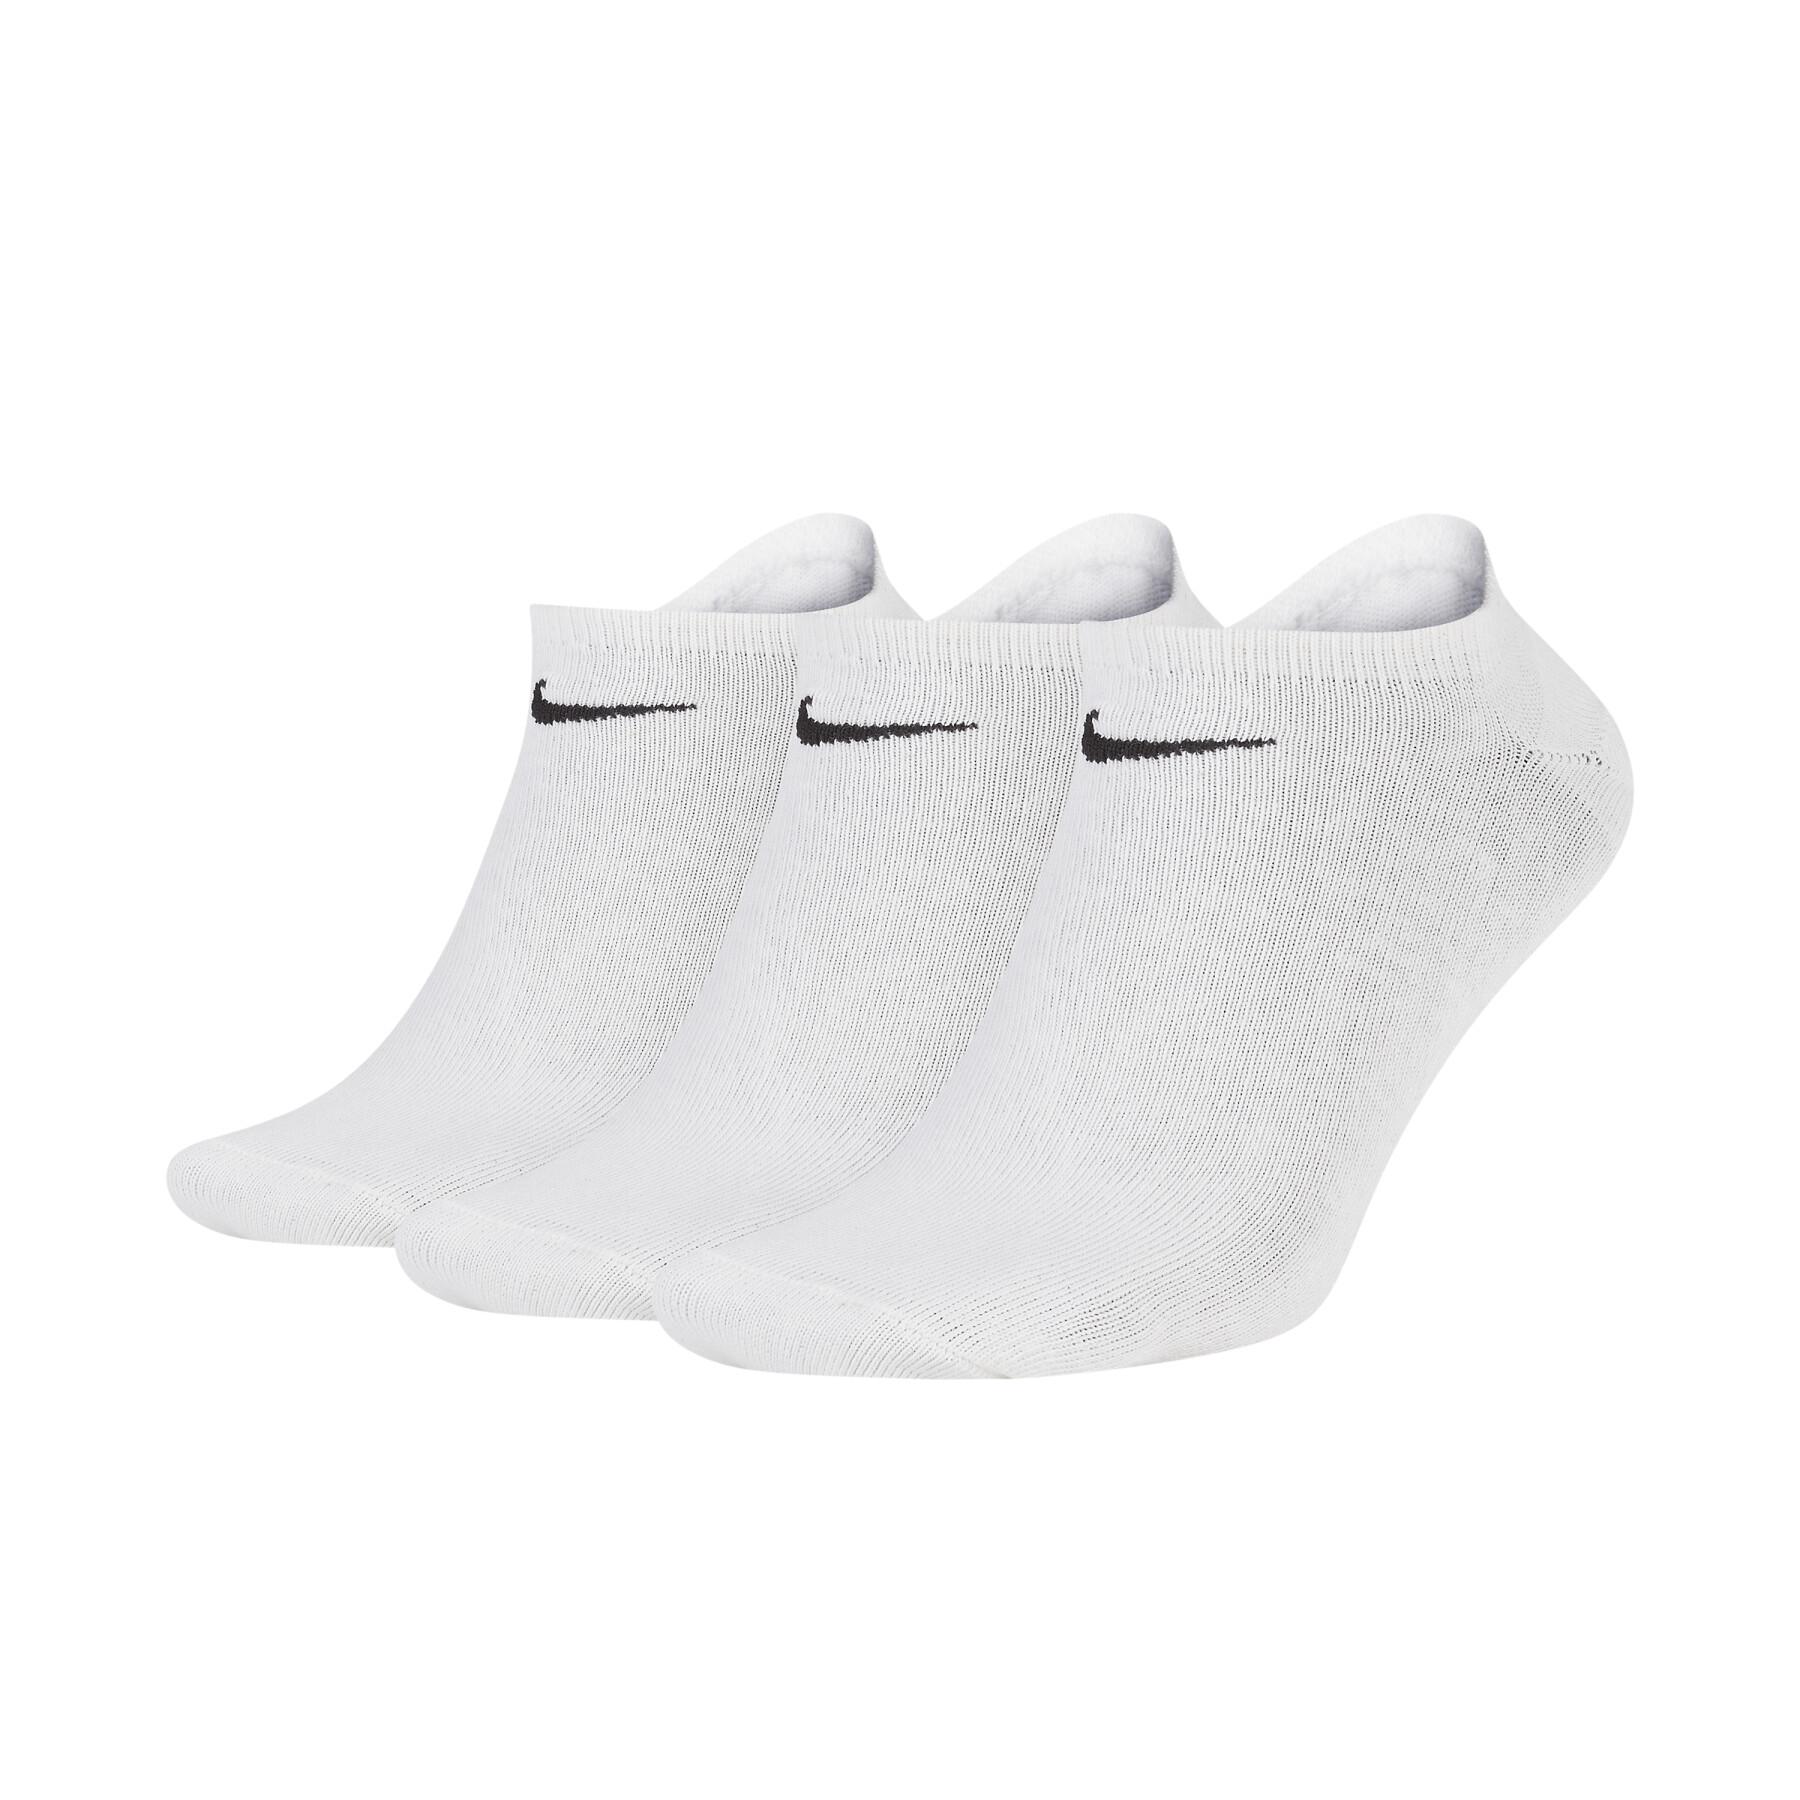 Low socks Nike Lightweight (x6)